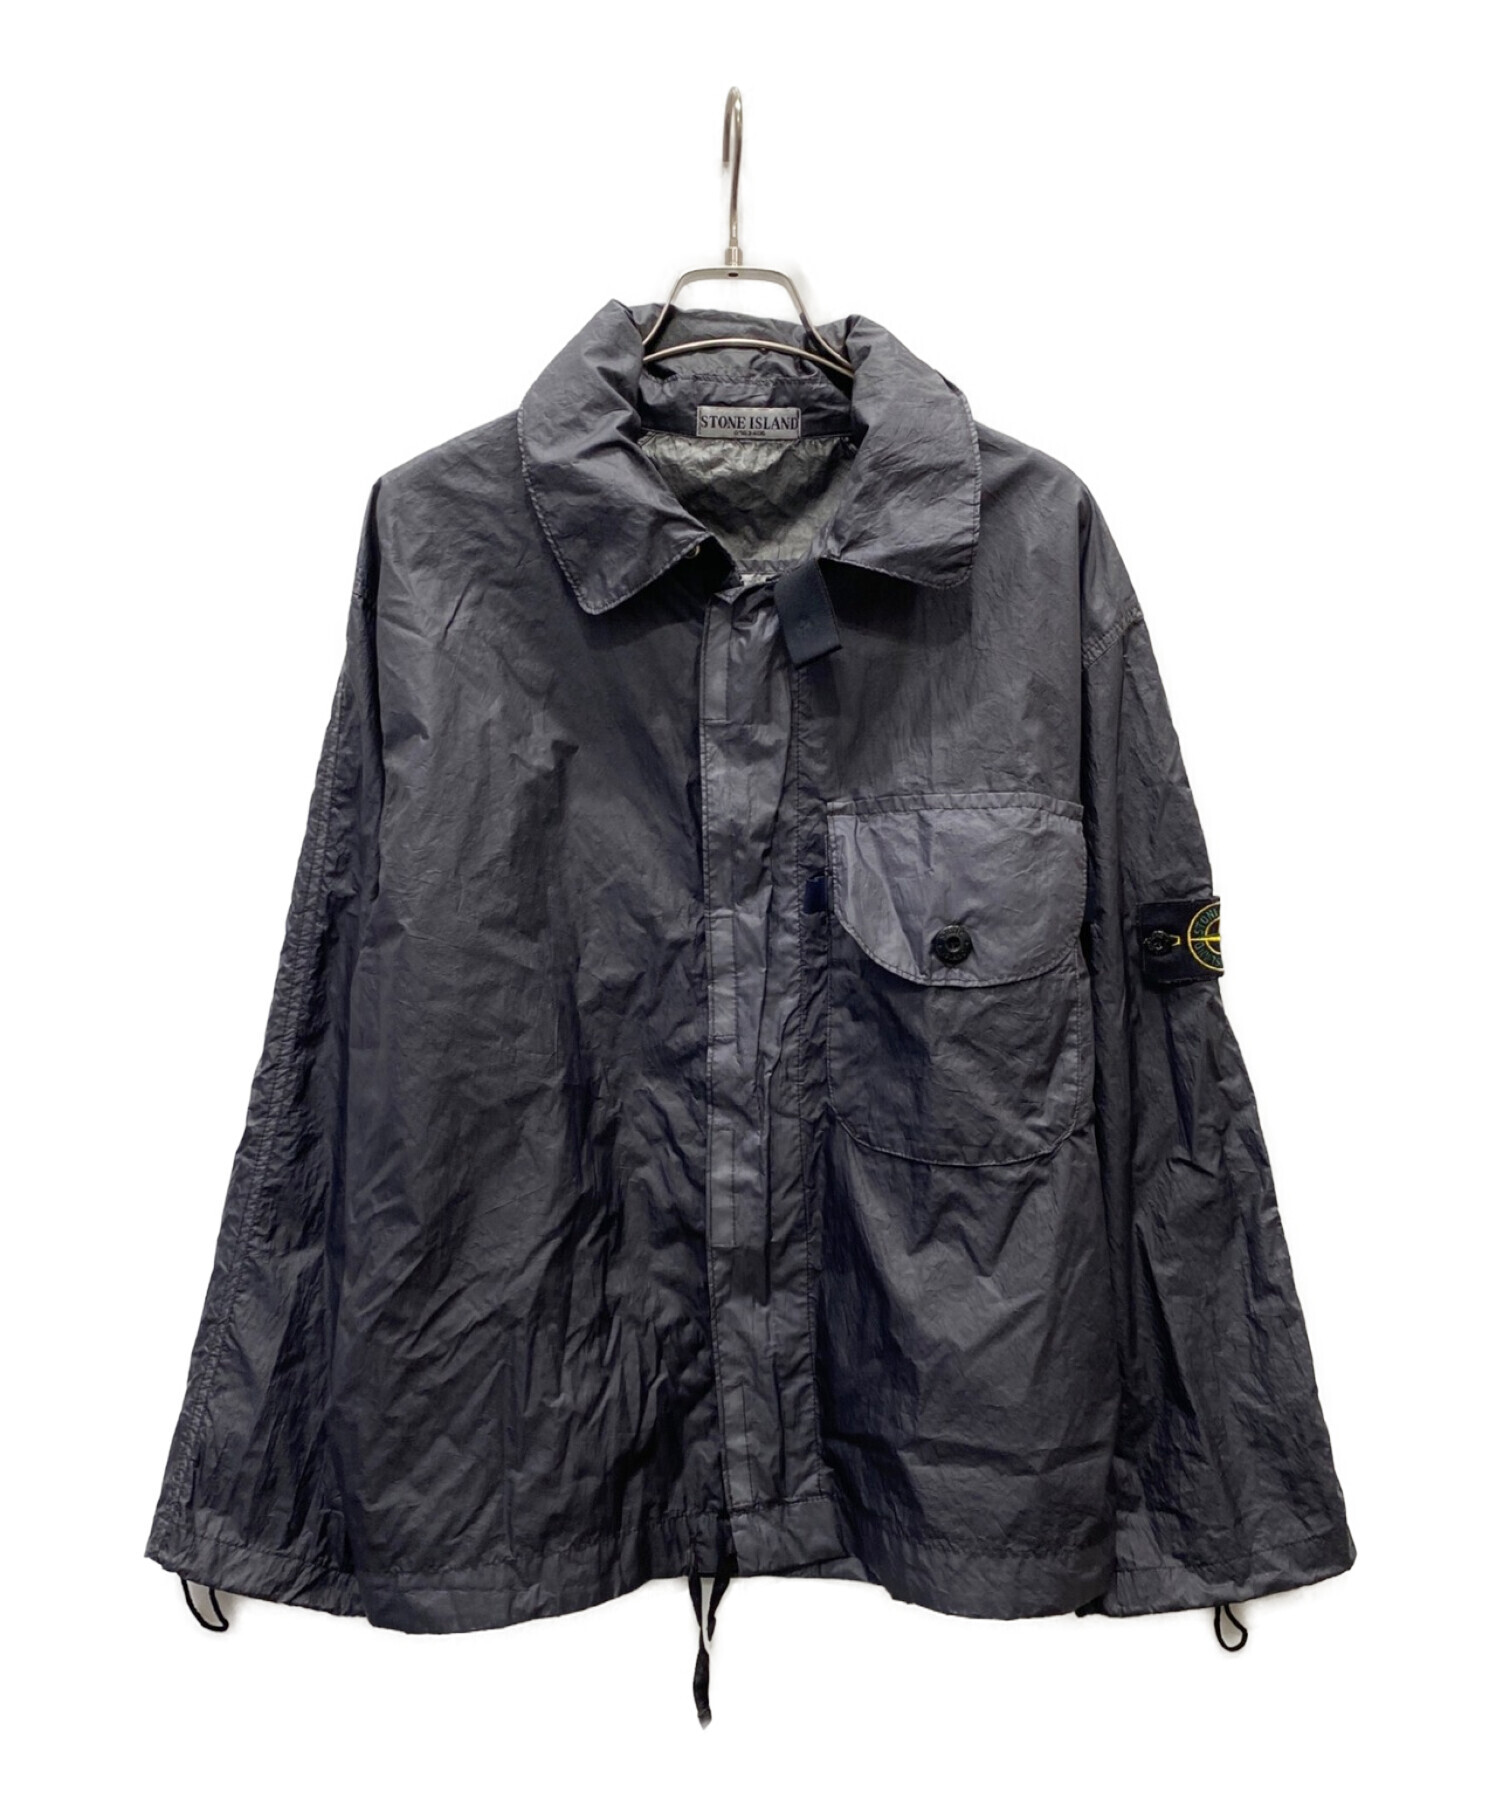 STONE ISLAND ストーンアイランド Nylon jacket-